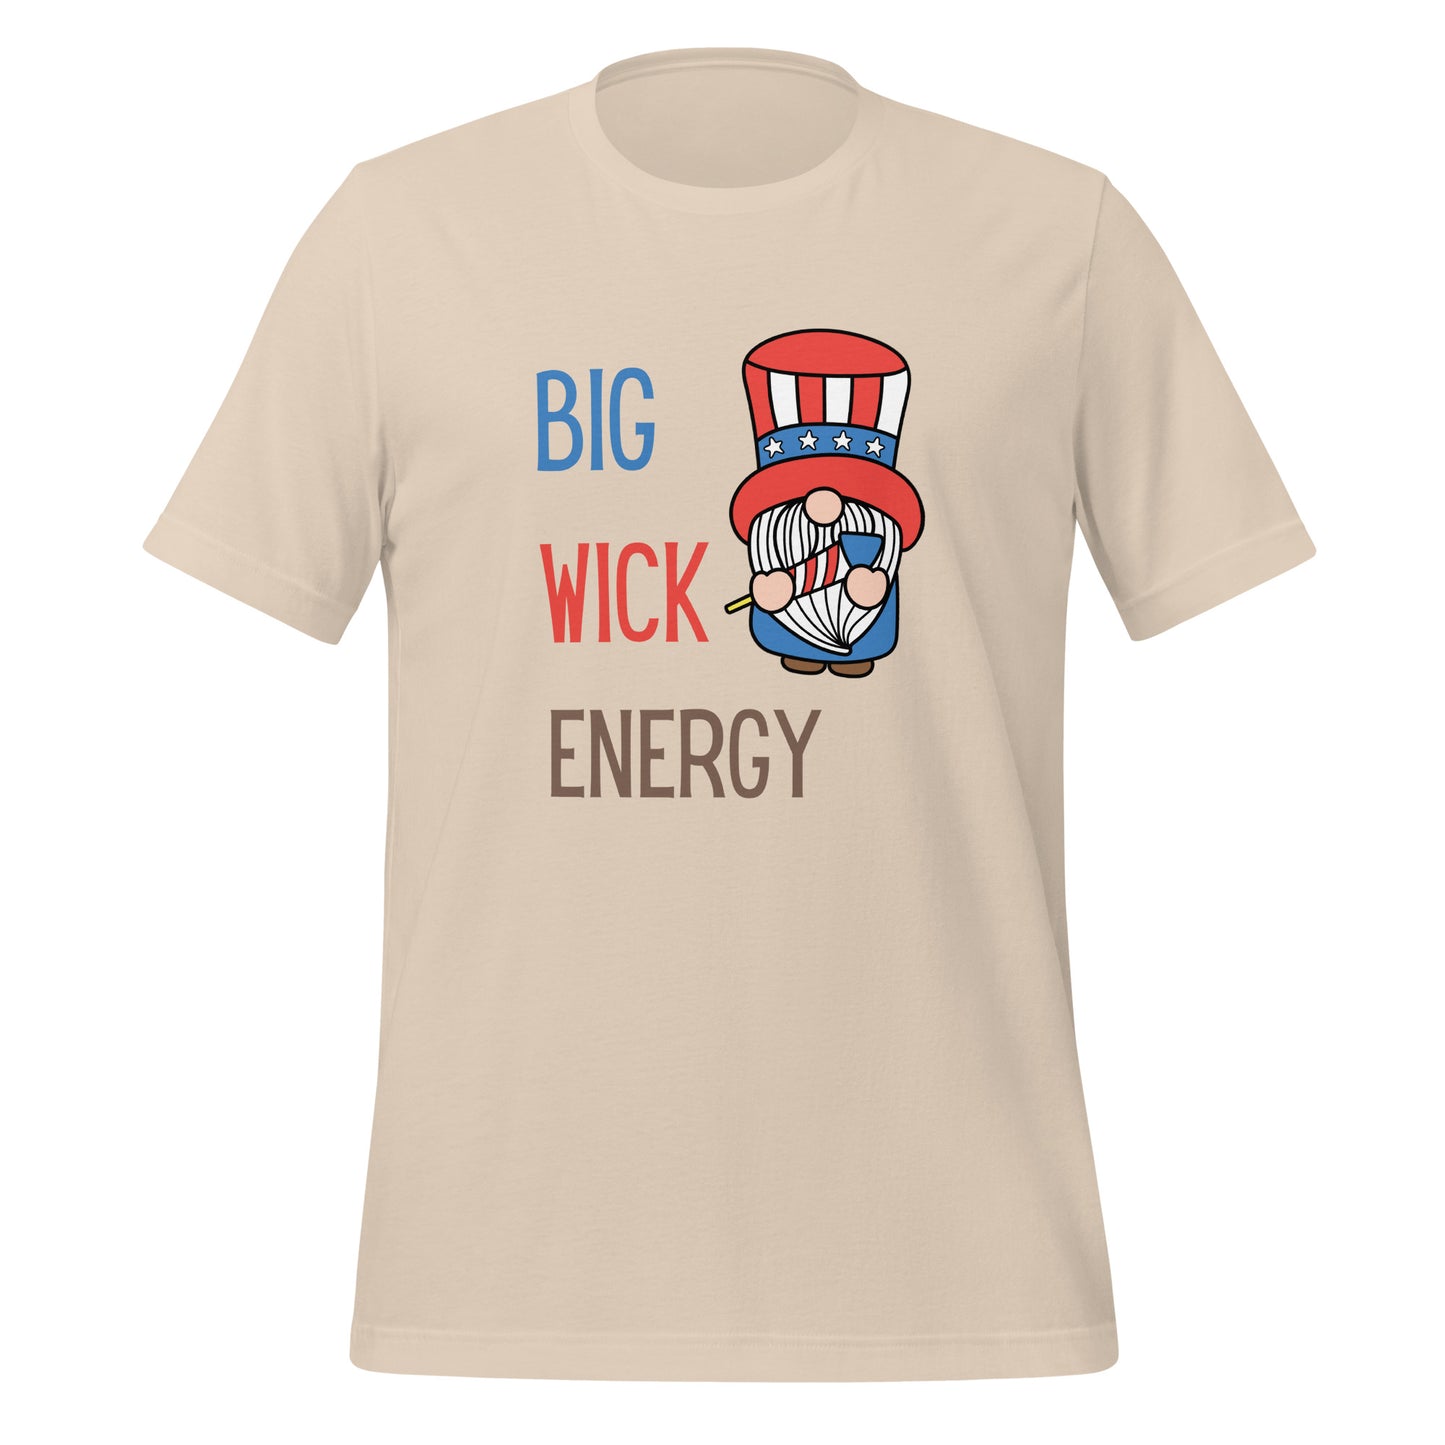 Big Wick Energy T-shirt